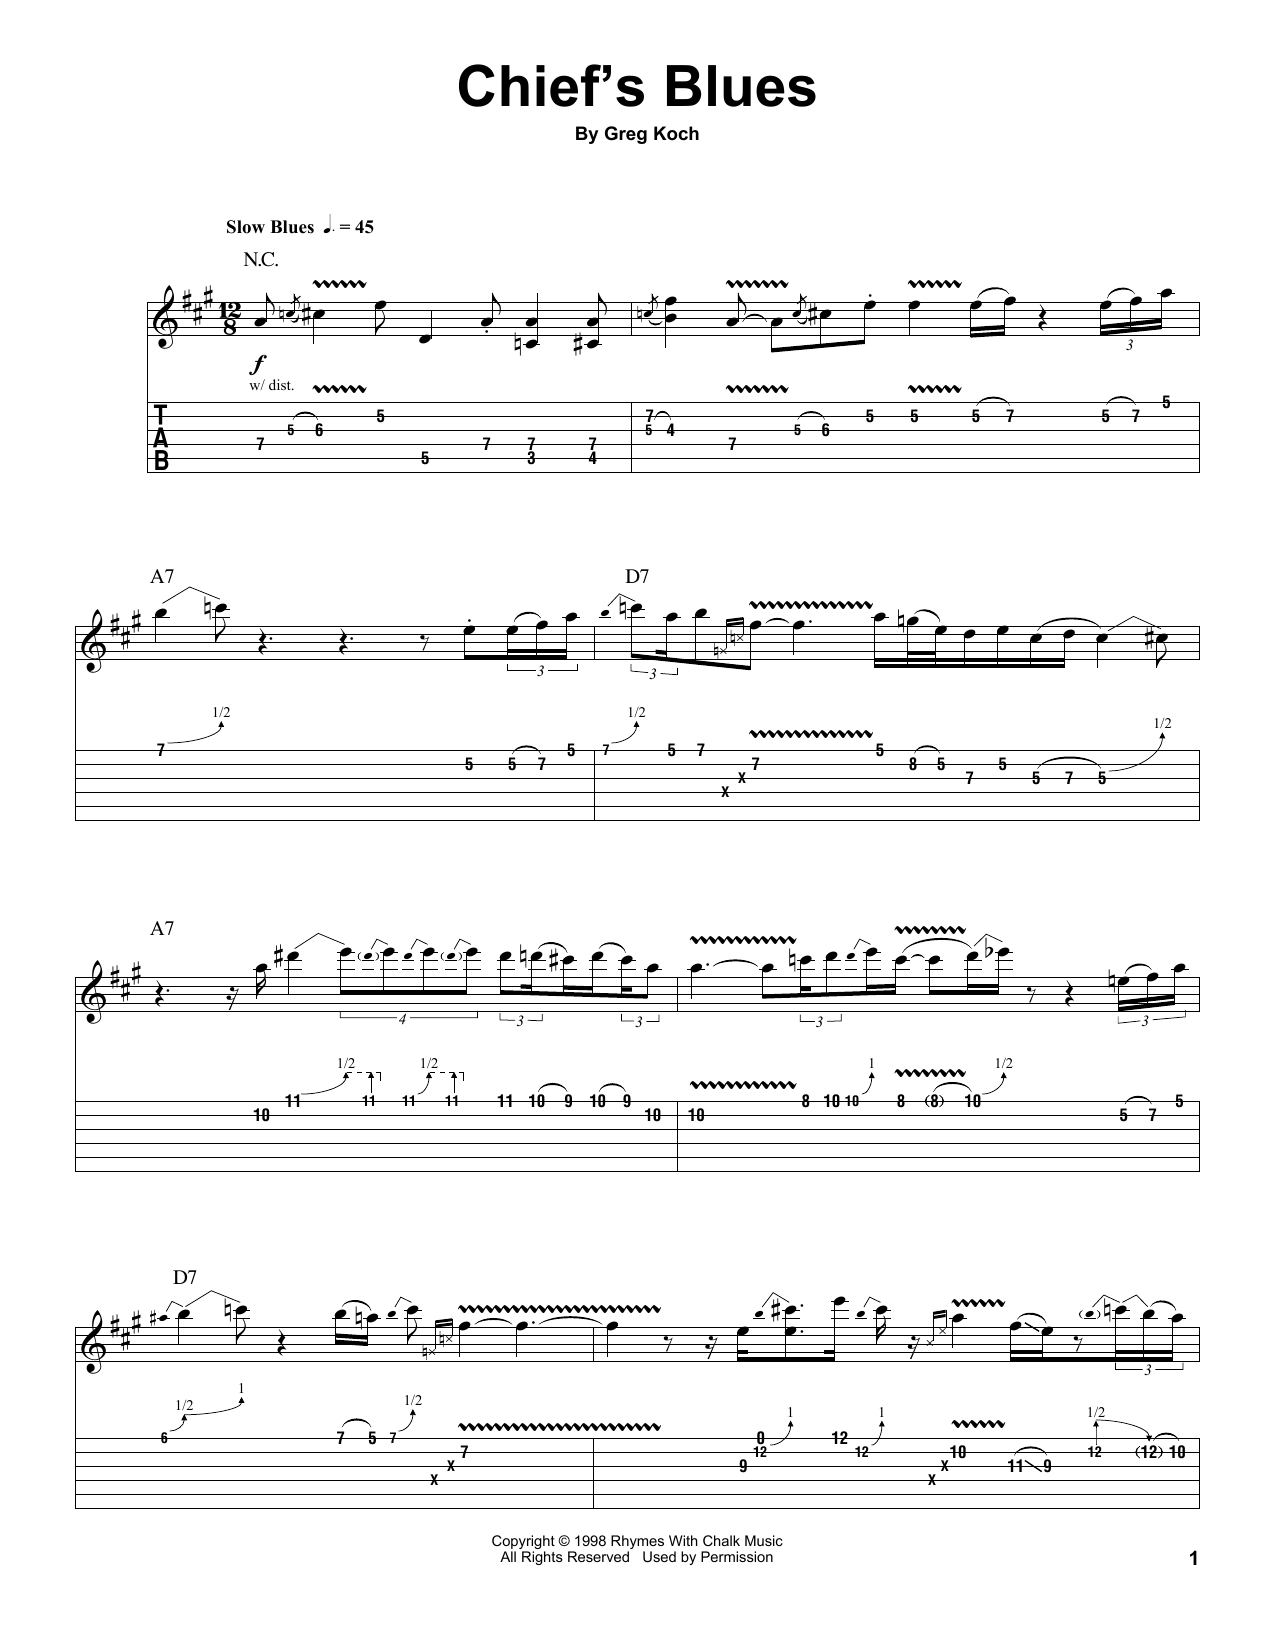 Greg Koch Chief's Blues Sheet Music Notes & Chords for Guitar Tab (Single Guitar) - Download or Print PDF